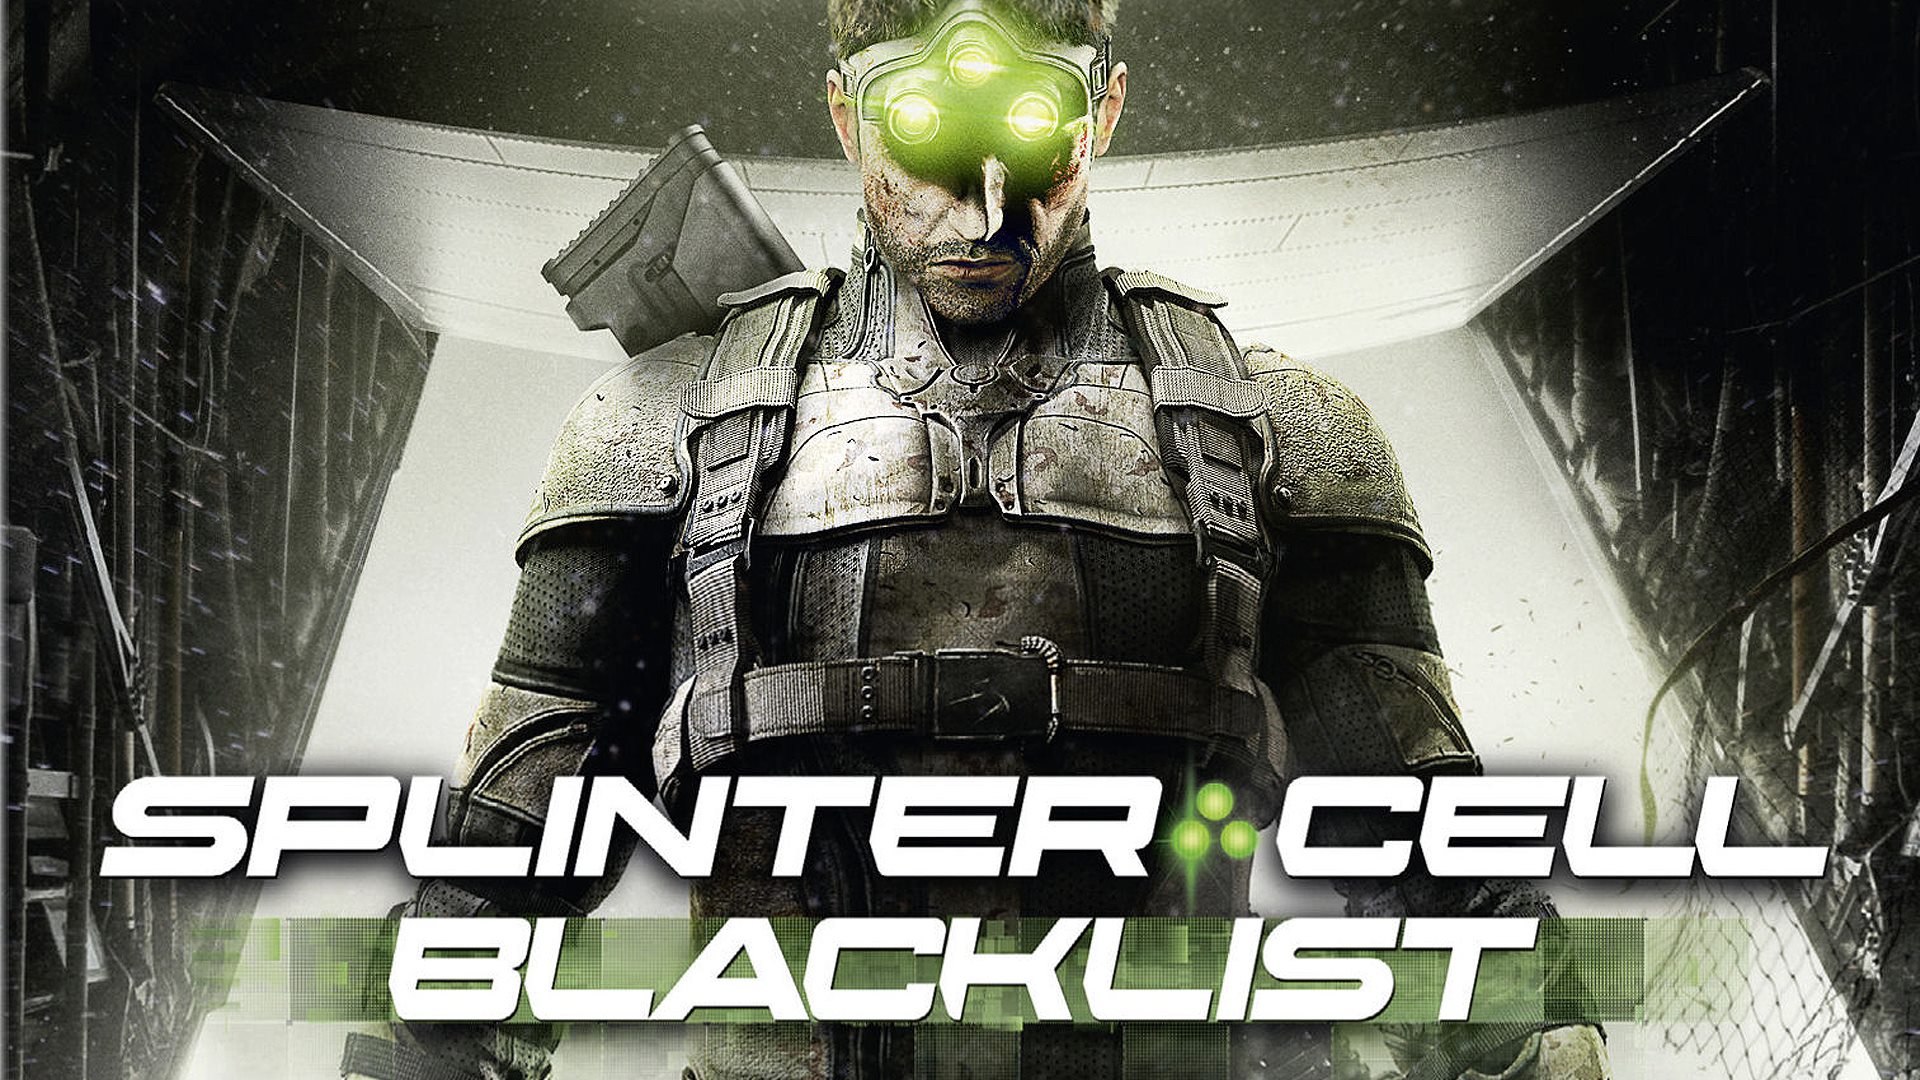 Игра tom clancy s splinter. Tom Clancy s Splinter Cell: Blacklist. Сэм Фишер Splinter Cell Blacklist. Tom Clancy s Splinter Cell: Blacklist обложка. Tom Clancy’s Splinter Cell: Blacklist геймплей.